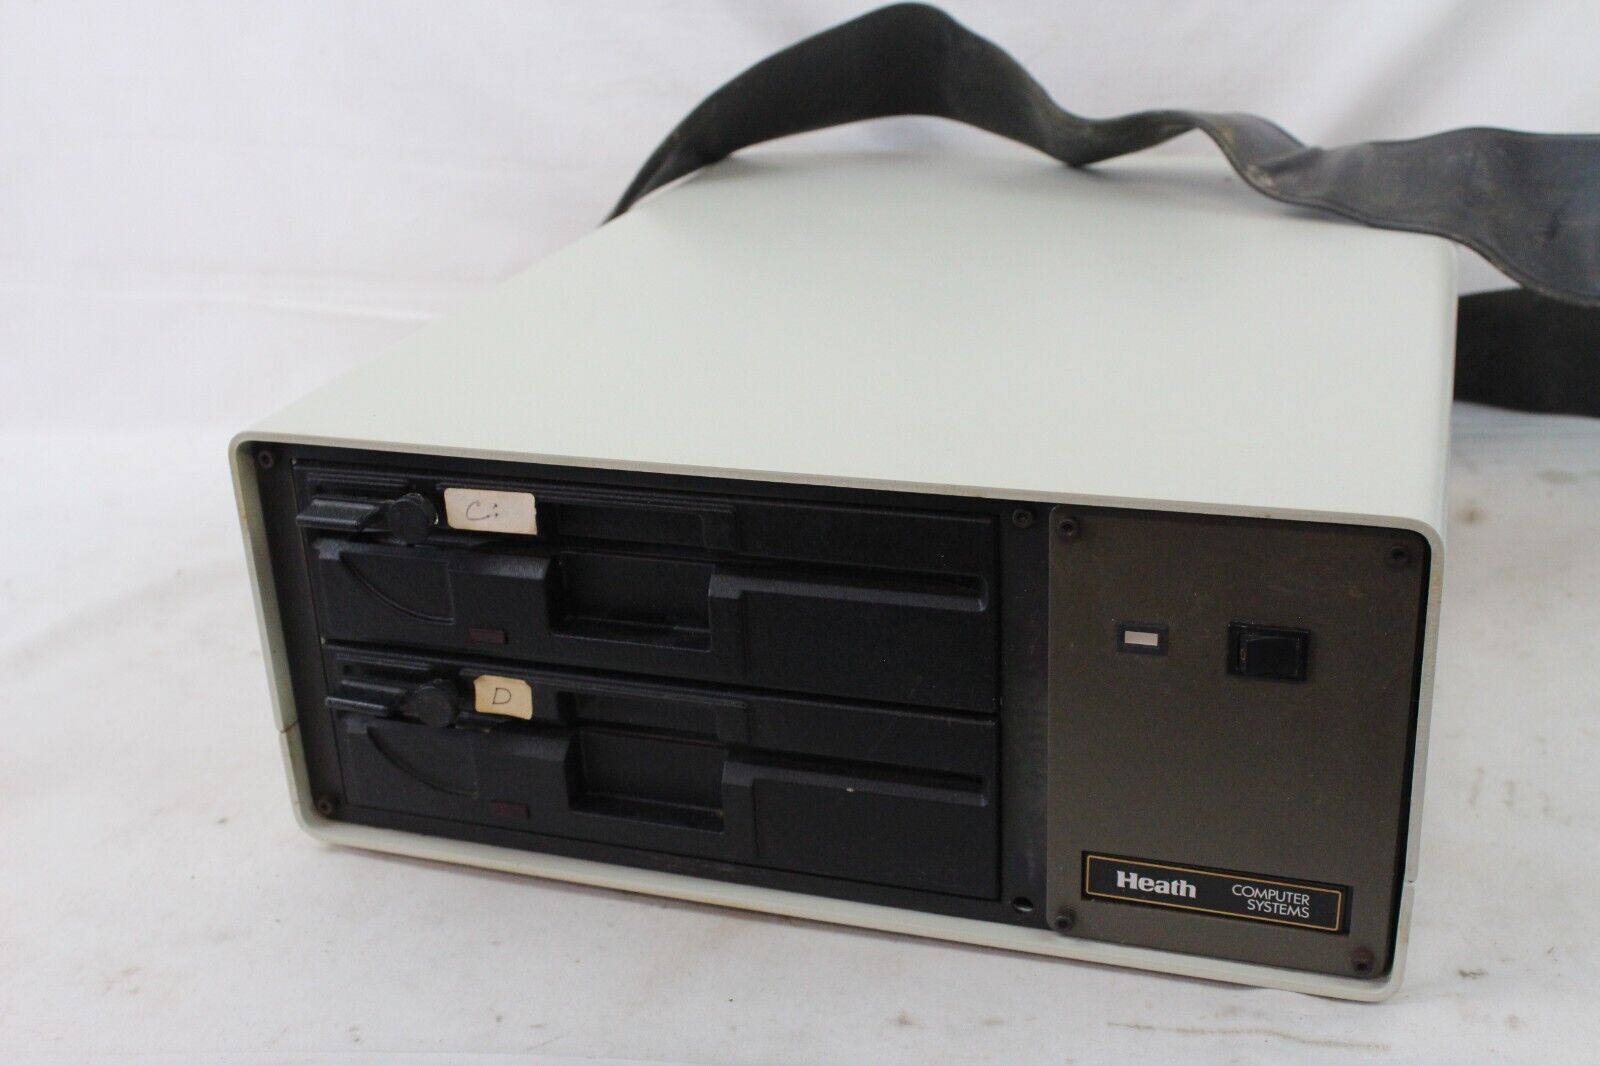 Vintage Heathkit Computer System Disk Drive Model H-207-40 Rare Electronics